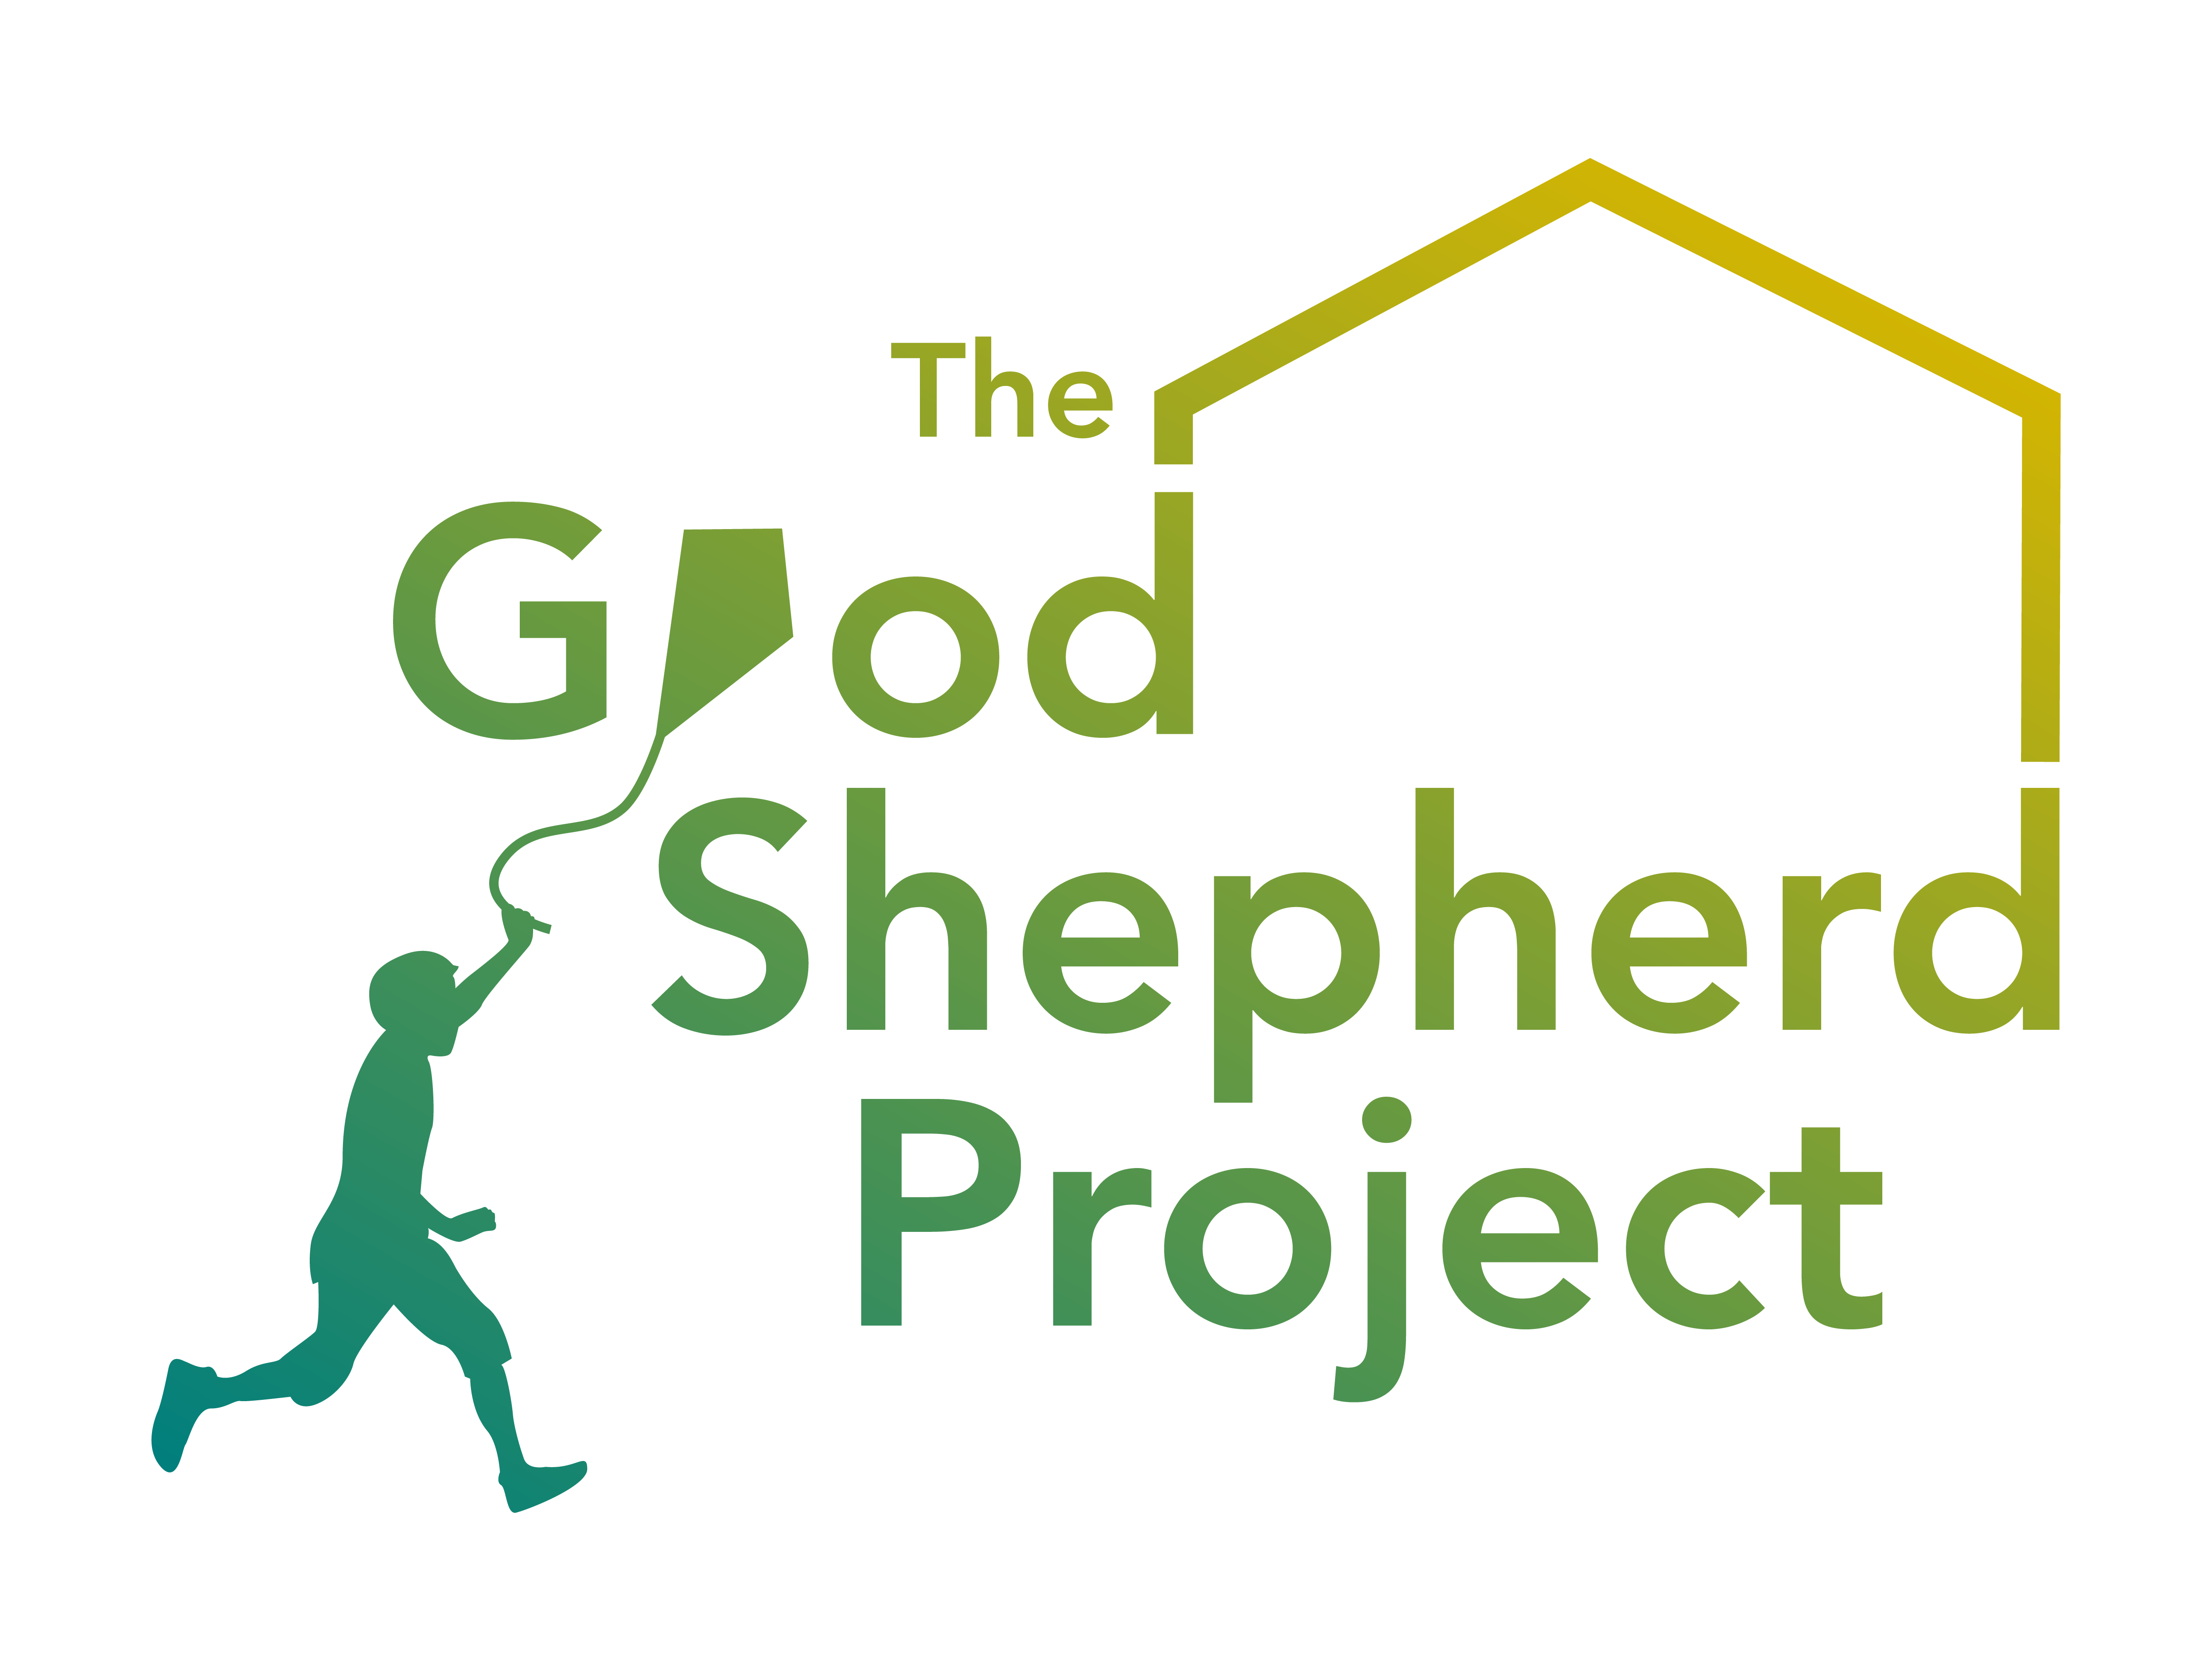 The Good Shepherd Project logo